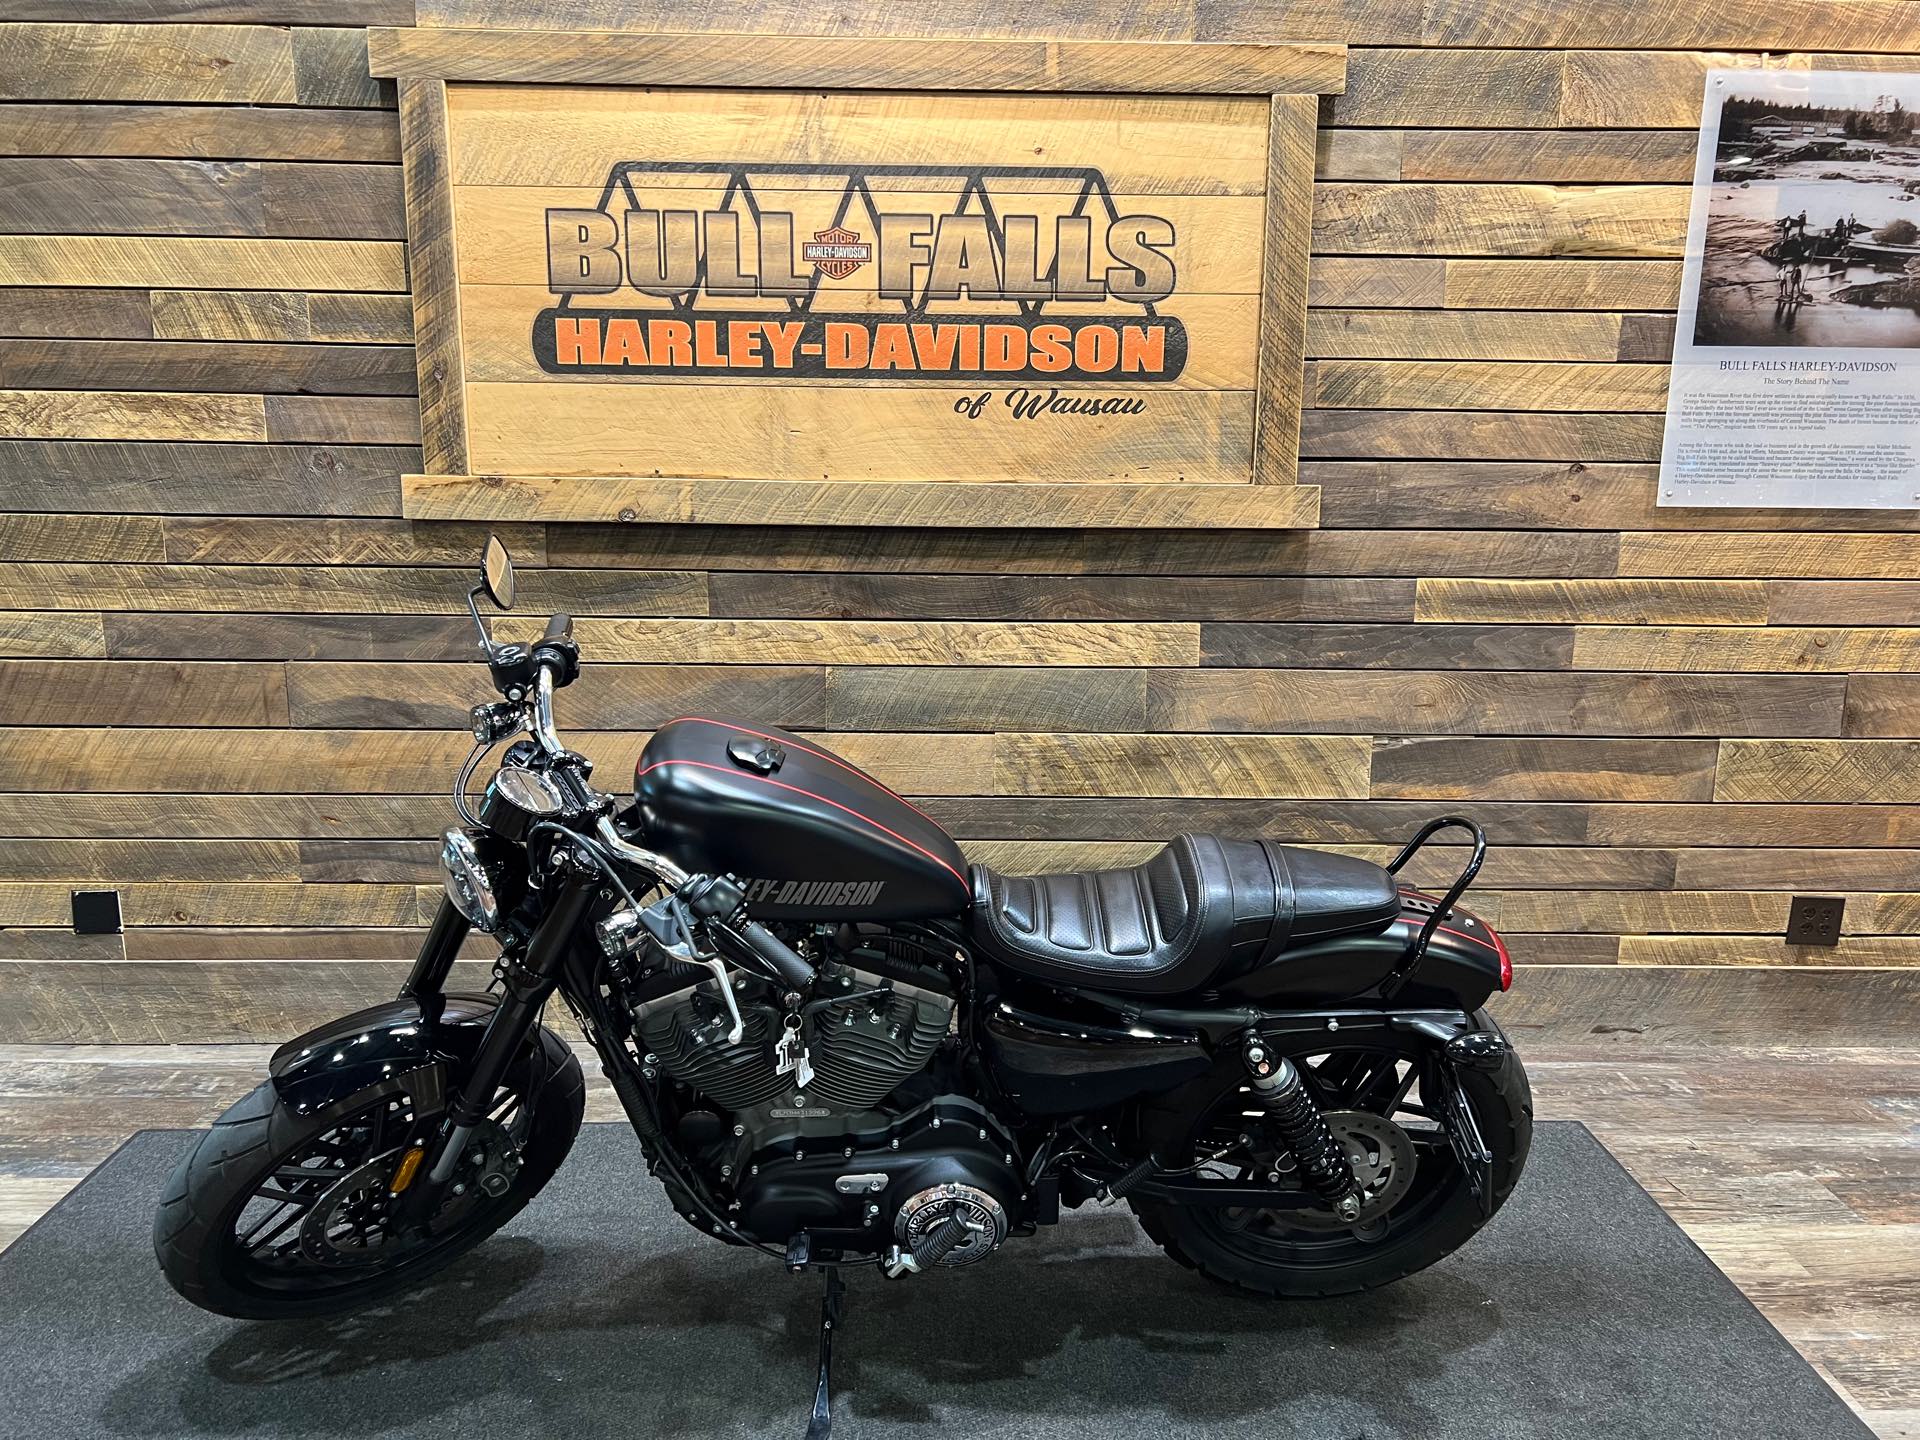 2017 Harley-Davidson Sportster Roadster at Bull Falls Harley-Davidson